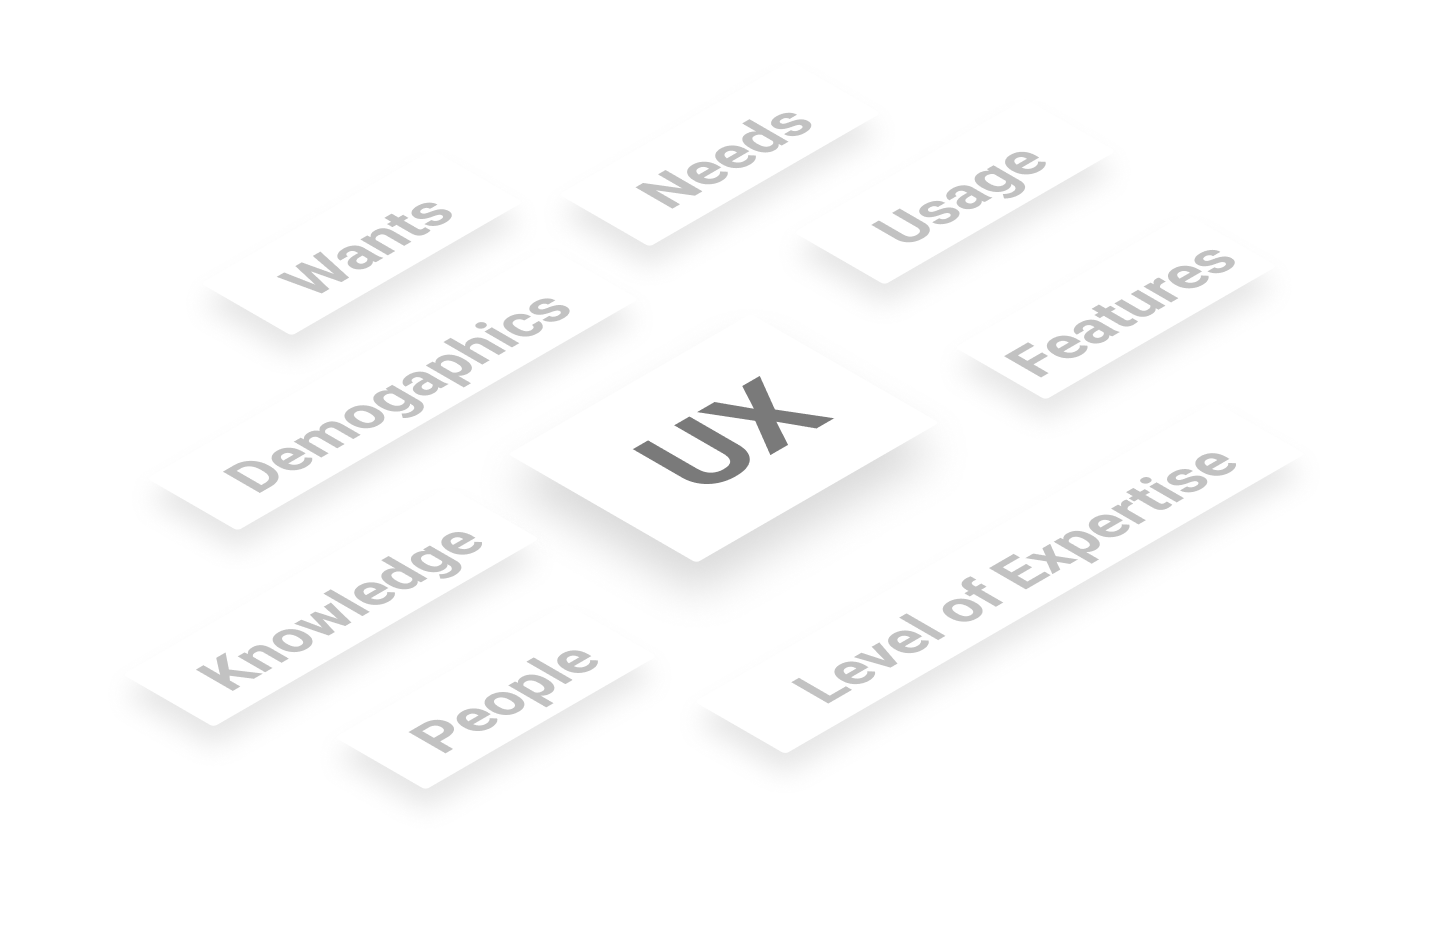 UX Design, and factors defining it.